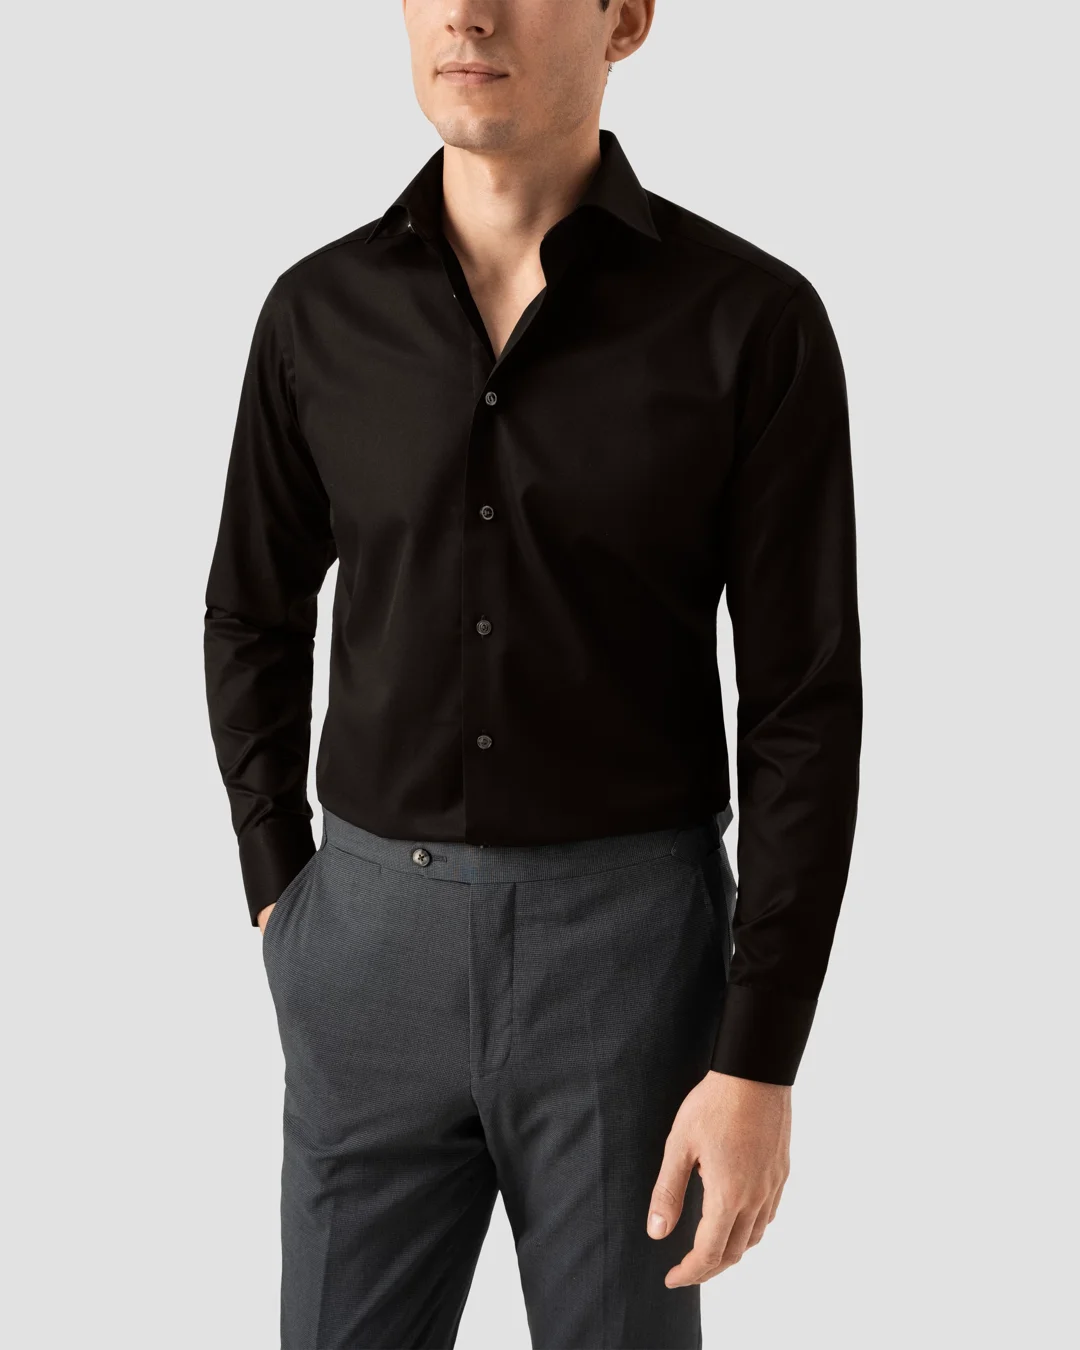 Black Signature Twill Shirt - Eton